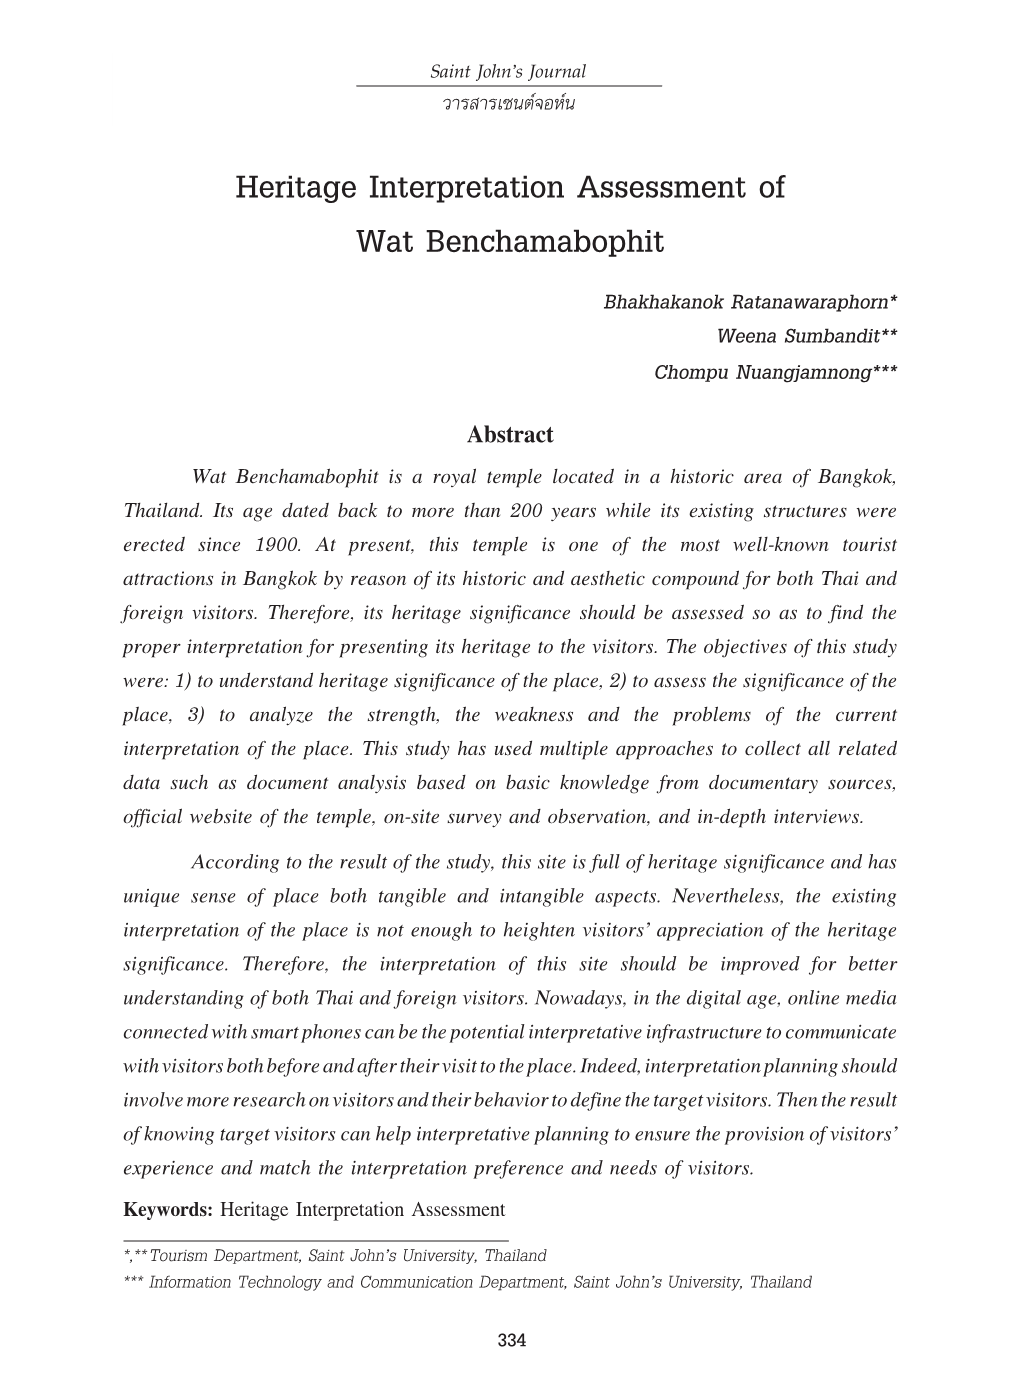 Heritage Interpretation Assessment of Wat Benchamabophit